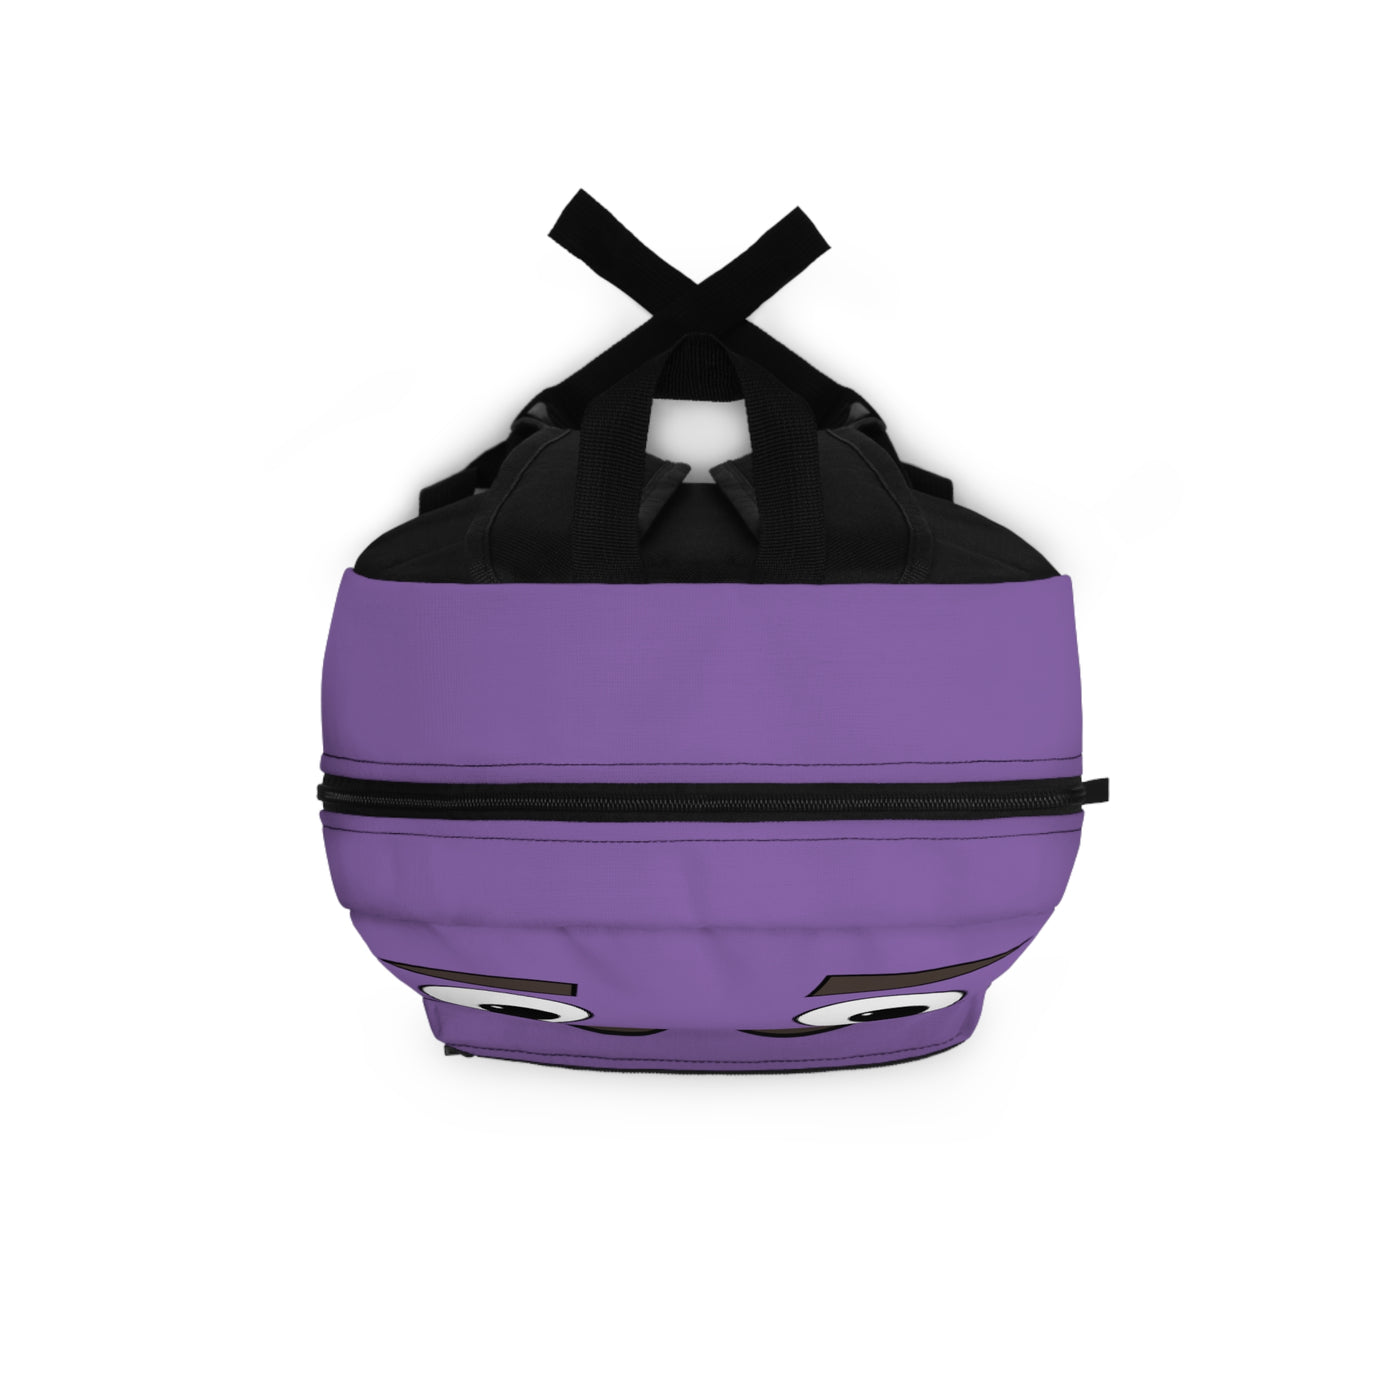 AshIV_ - Purple MWW Backpack